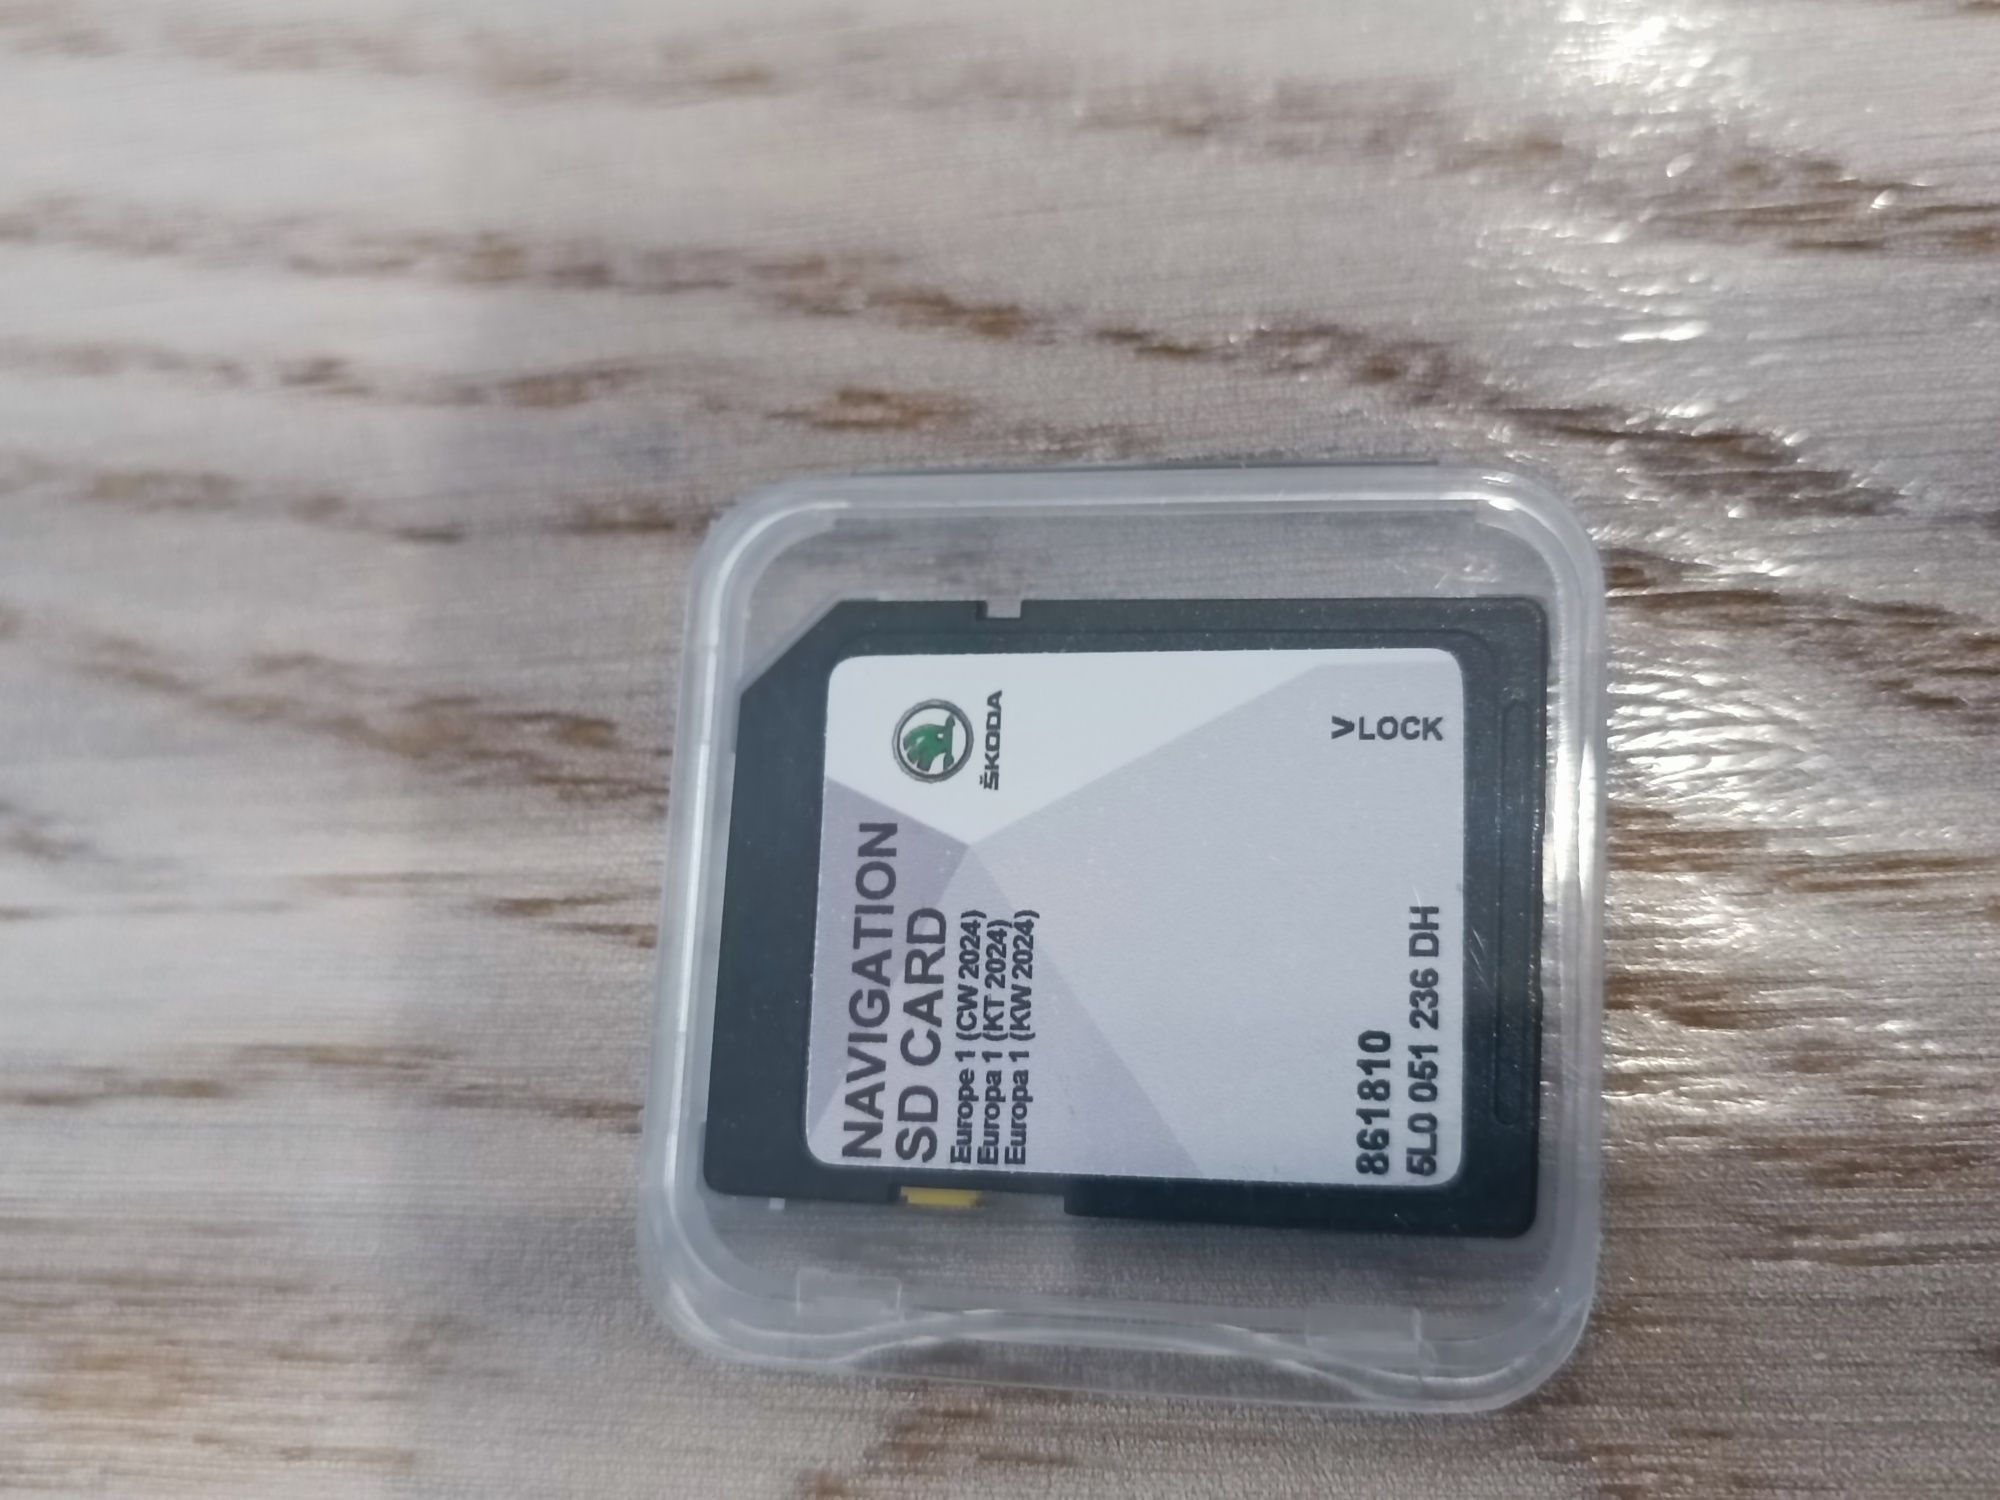 SD card navigatie Skoda 32 GB, full Europa, MIB2 Admunsen, Columbus